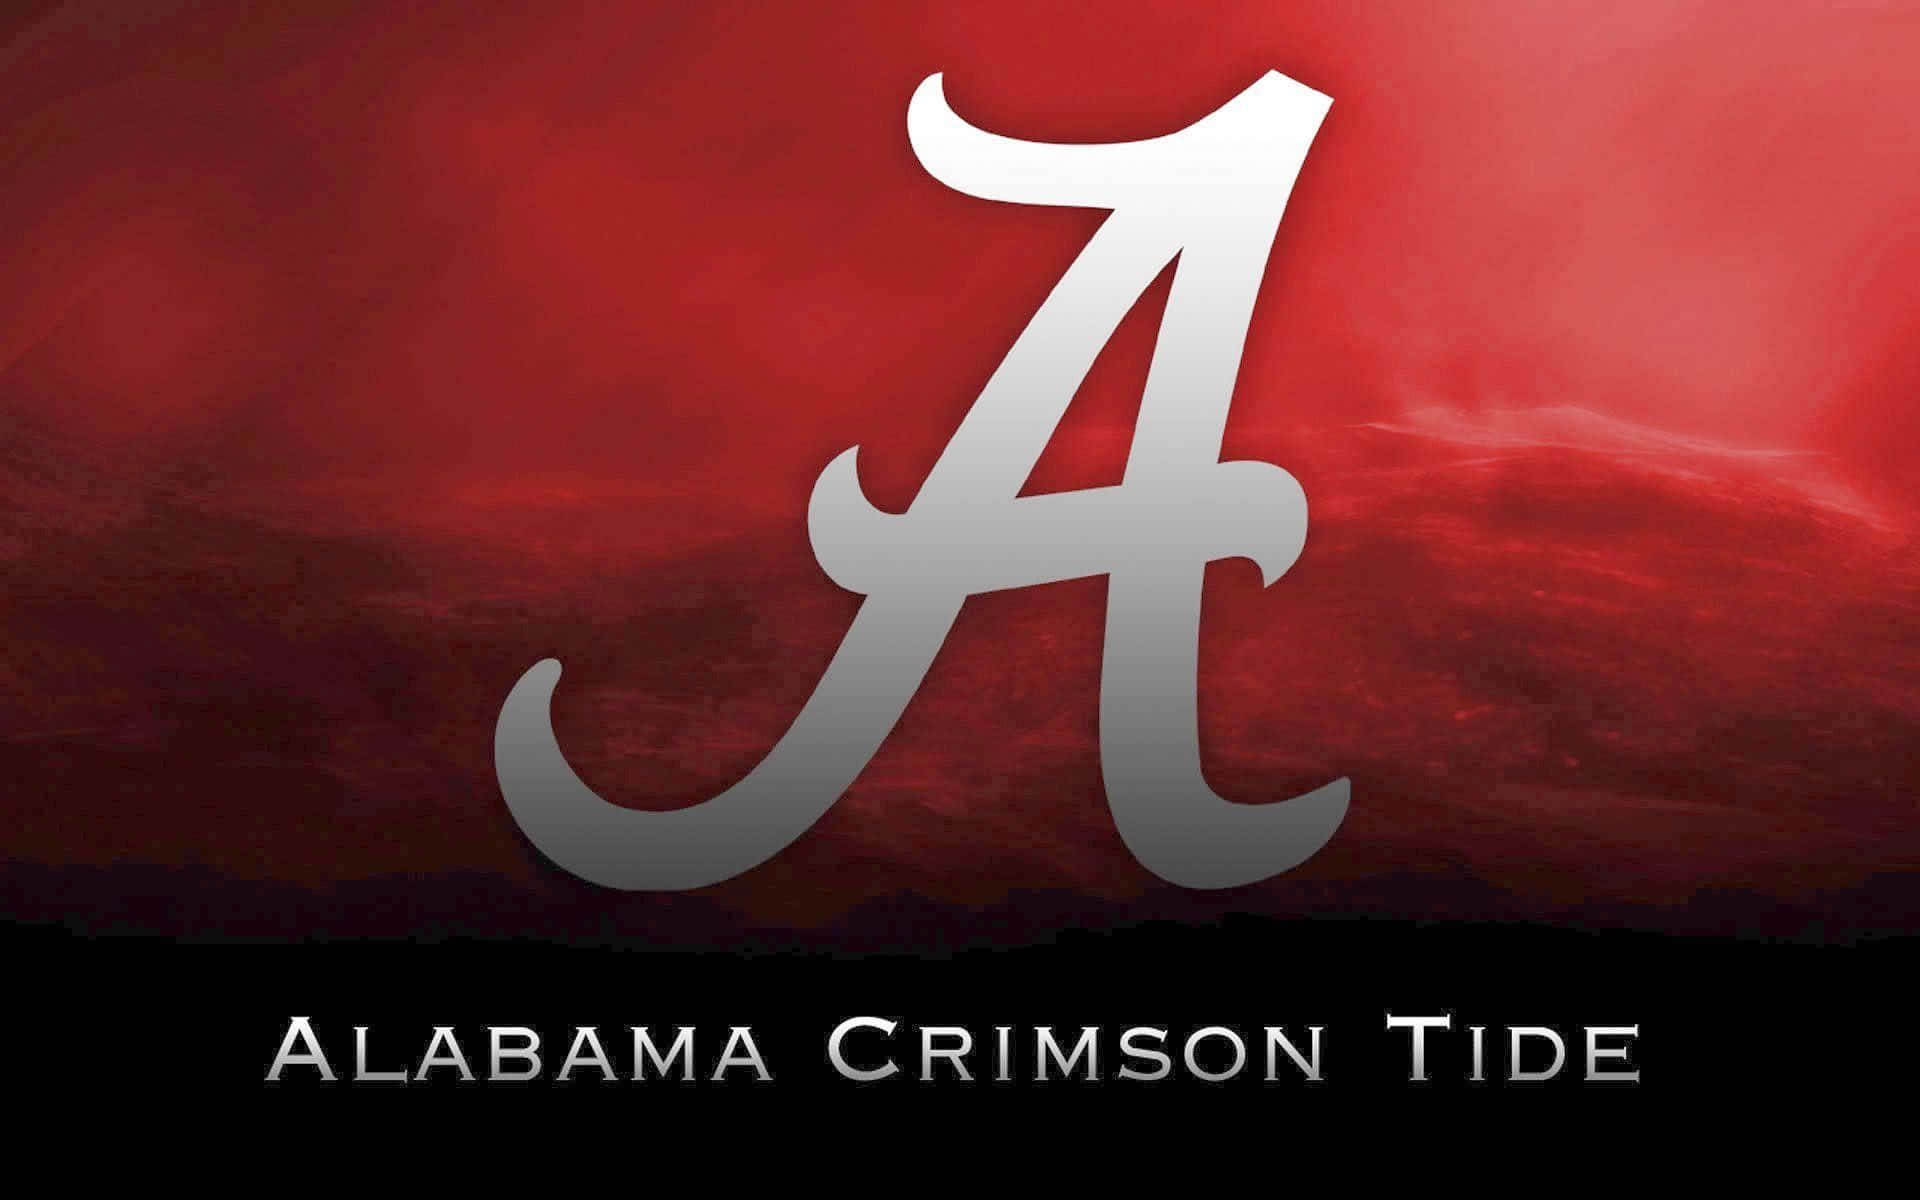 Alabama Football Team Crimson Tide Red Logo Graphic Design Background